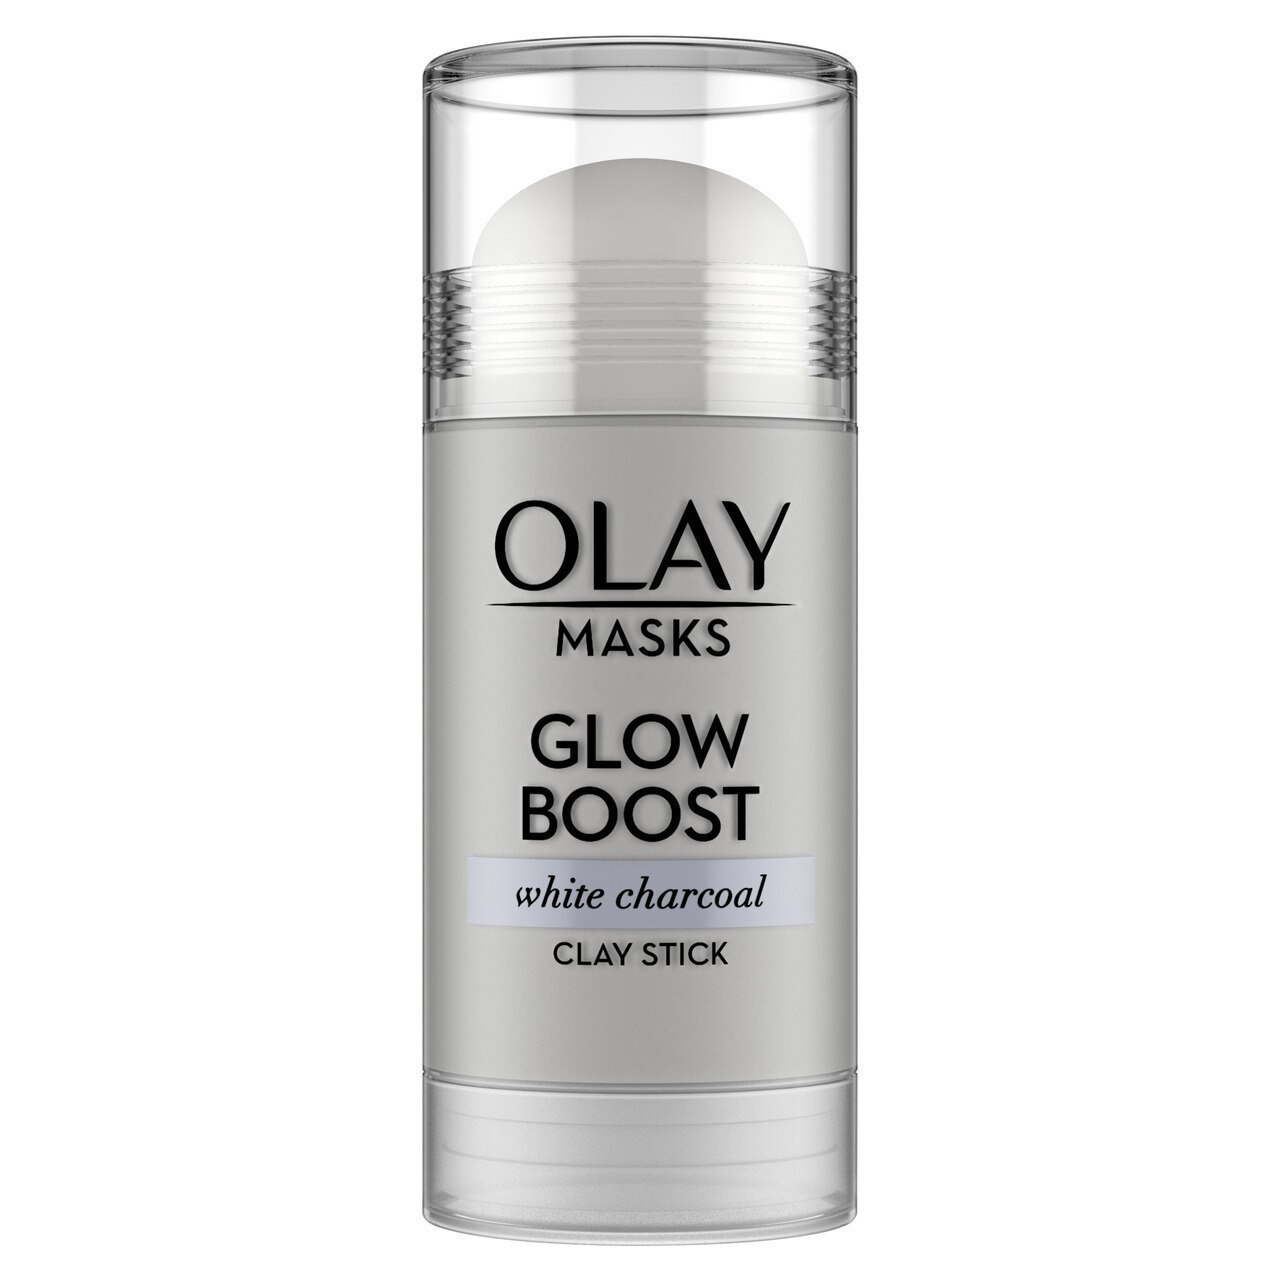 Olay Masks, Clay Stick Glow Boost